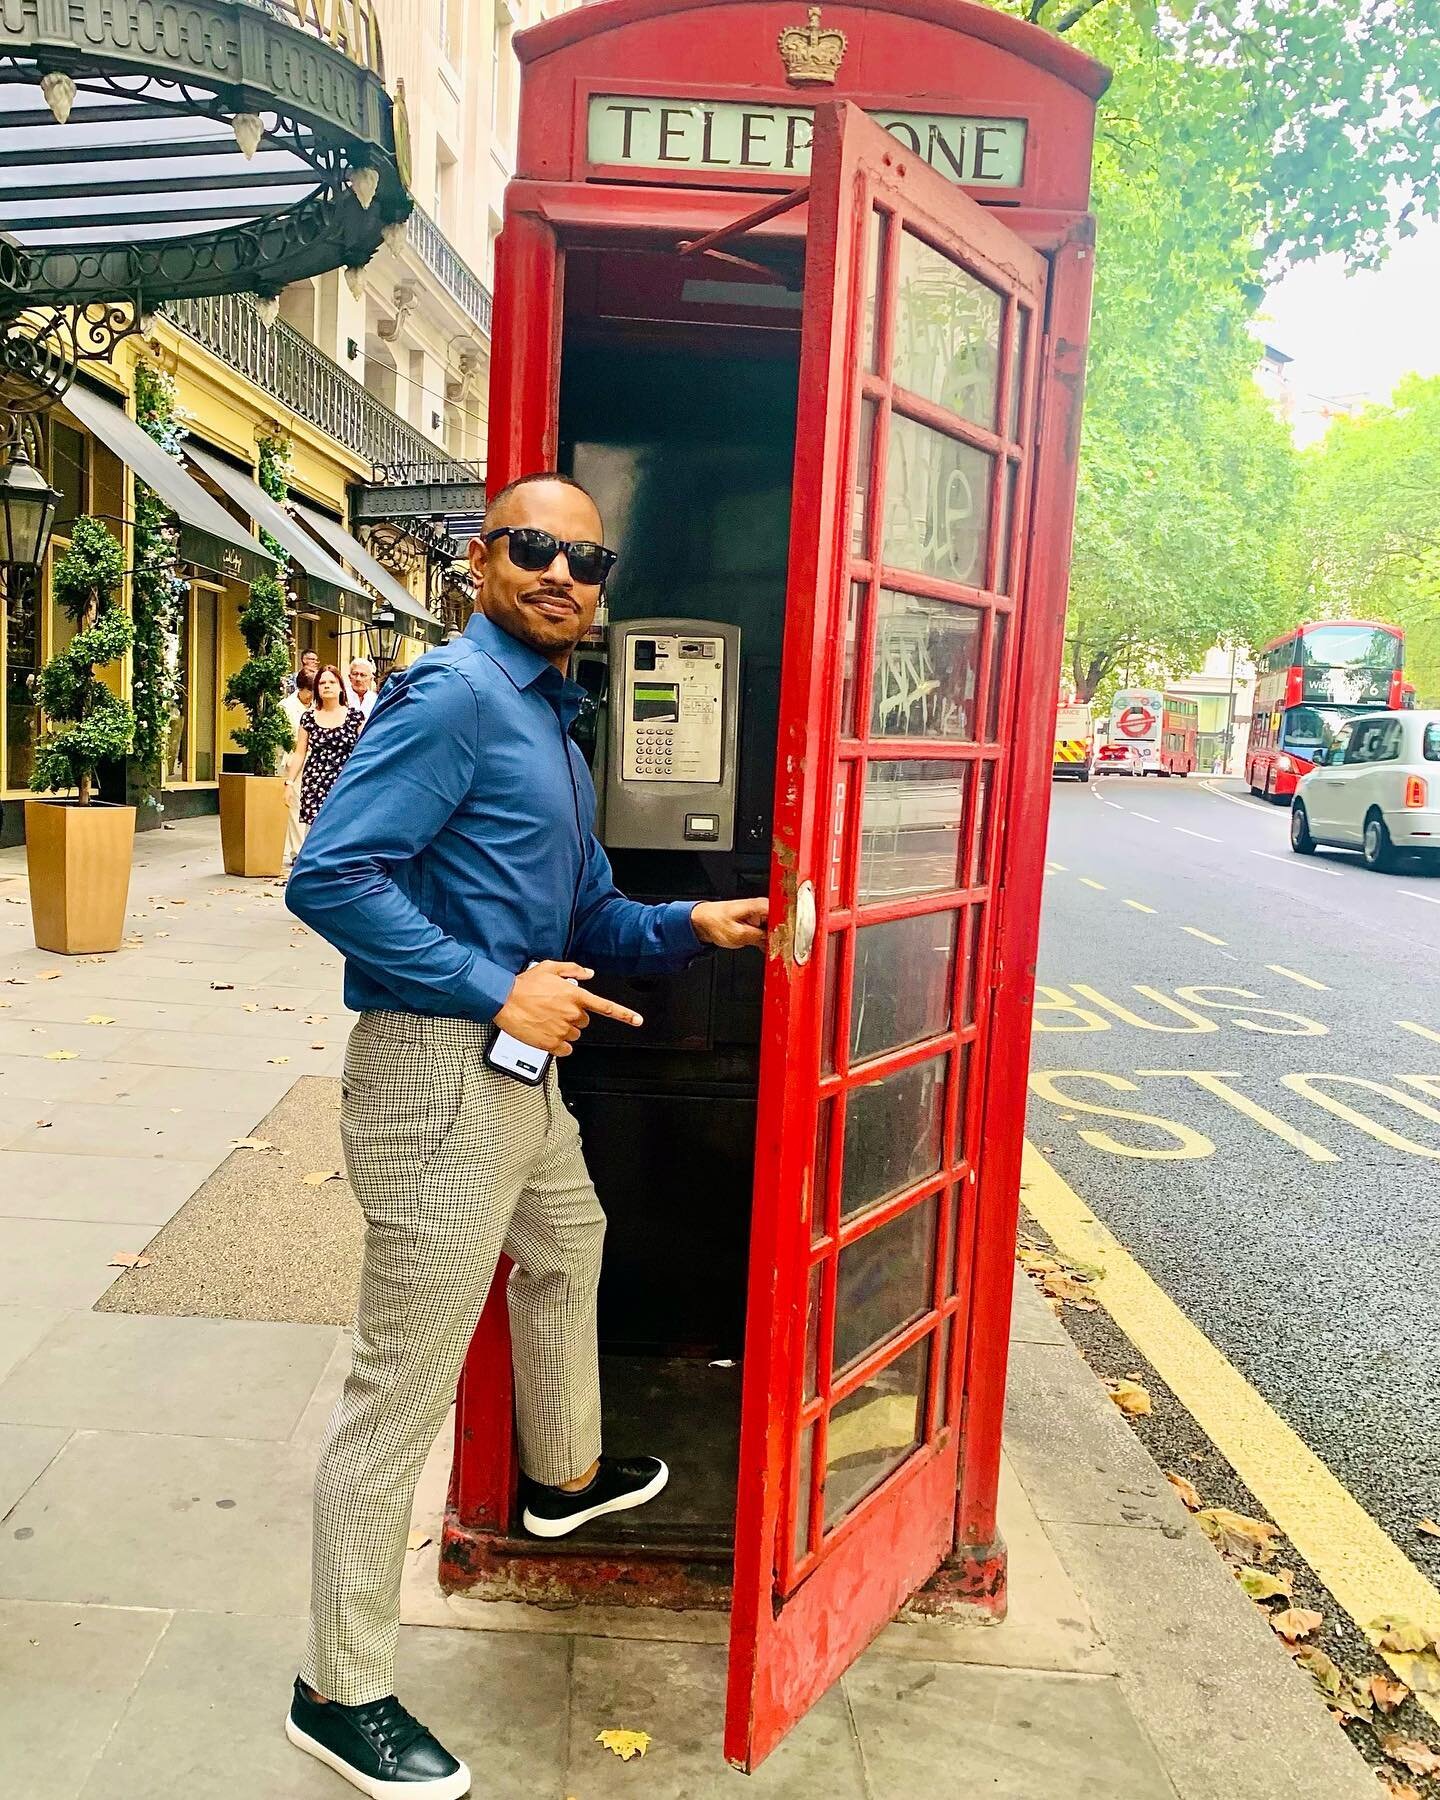 Client and friend @the_brandonb enjoyed his birthday festivities in London styled by Fashion Mr.

#birthdaytravel #styledbyfashionmr #lookgoodfeelgreat #travelgram #bookme #bookthelook #atlantafashionstylist #london #uk